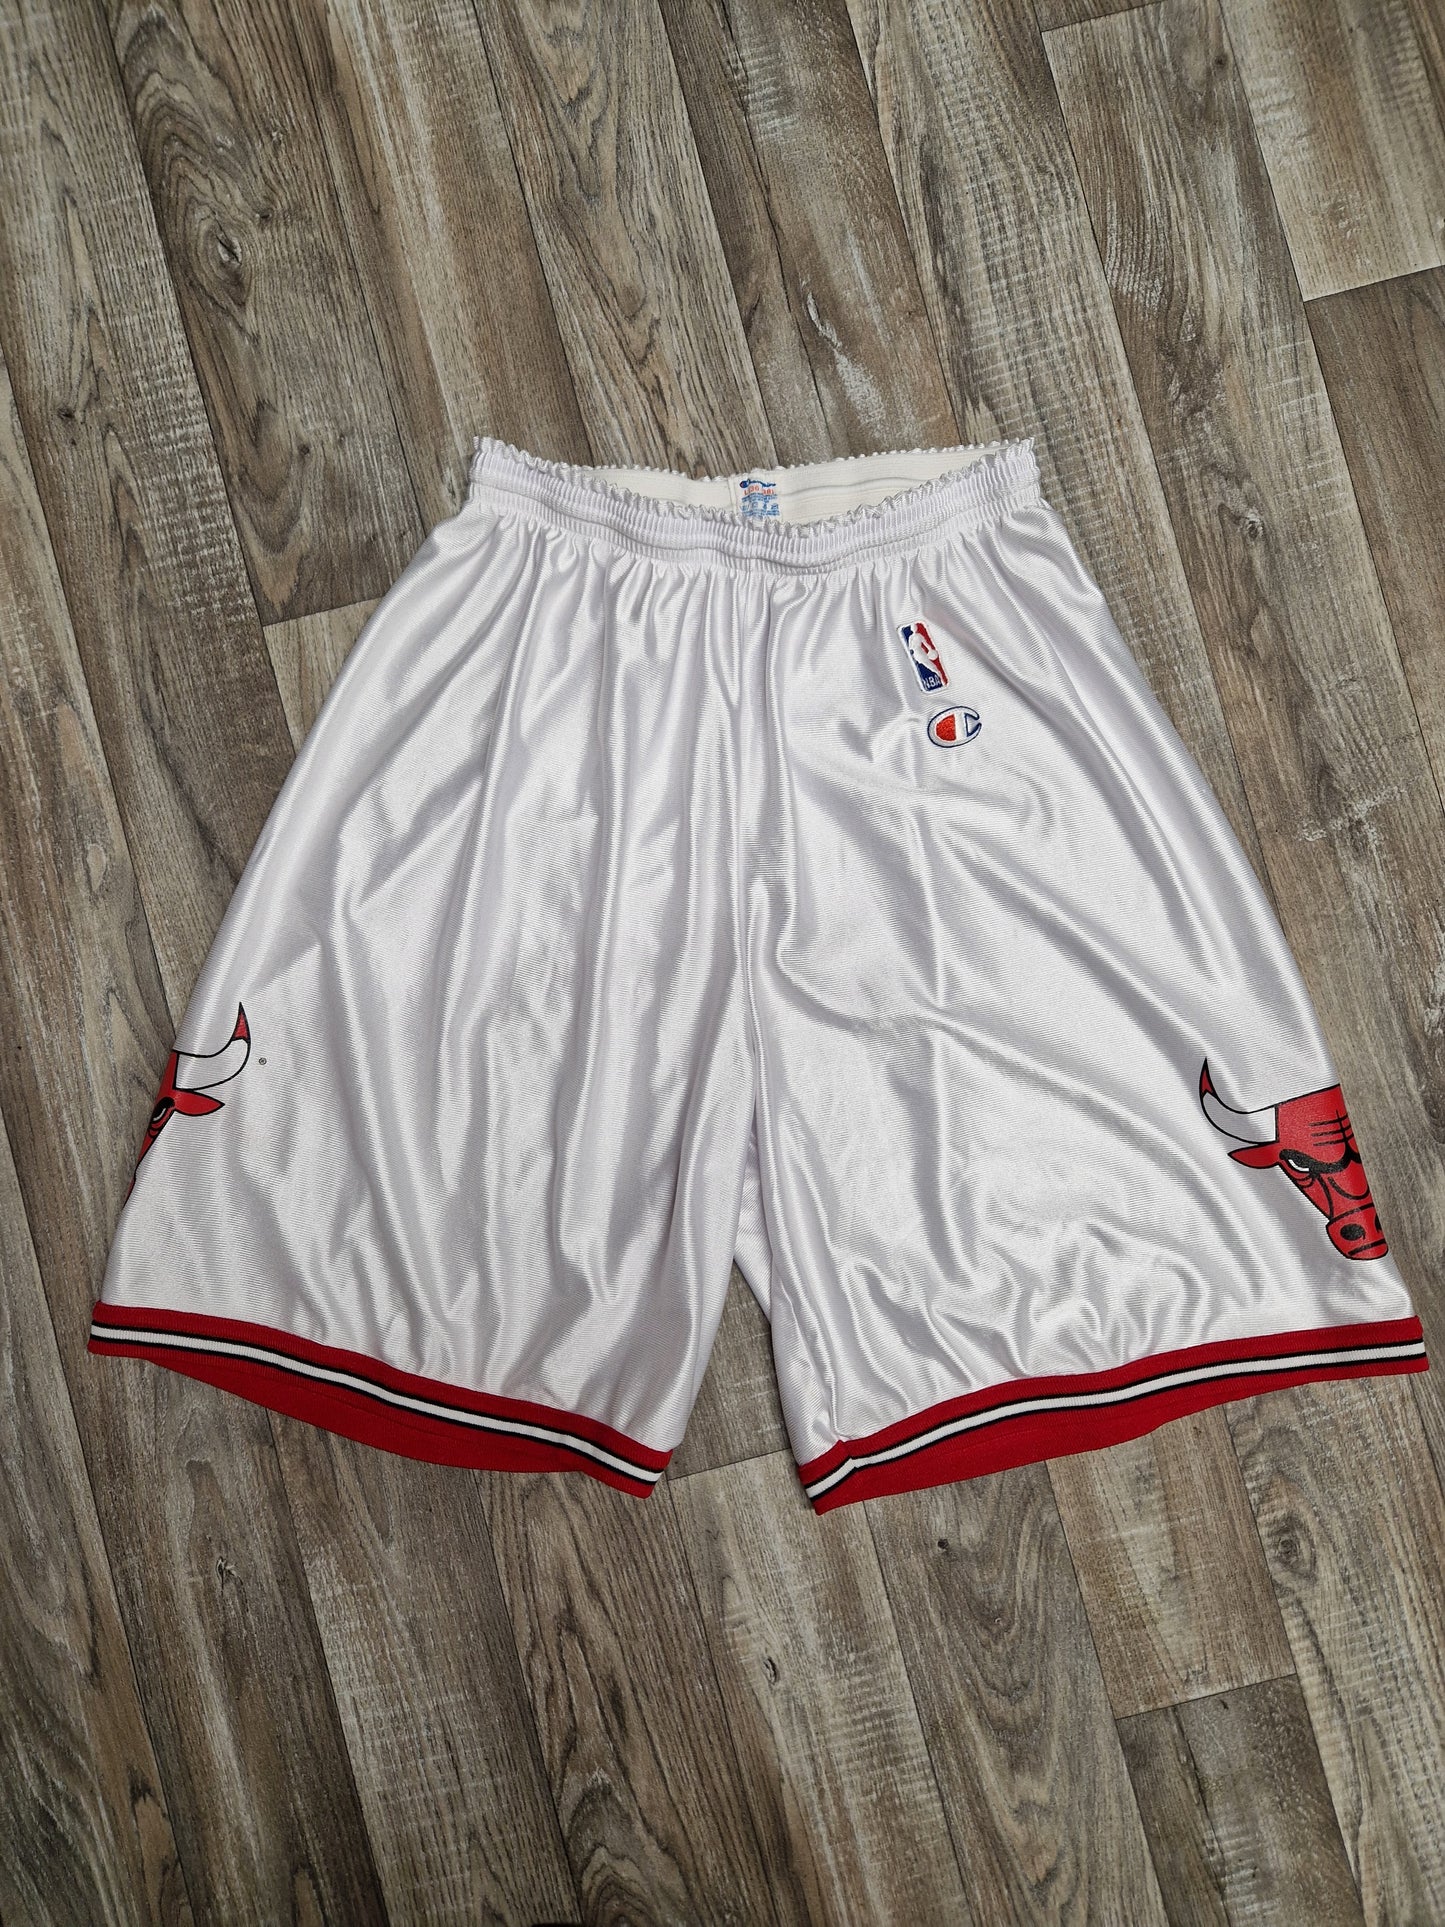 Chicago Bulls Shorts Size XL